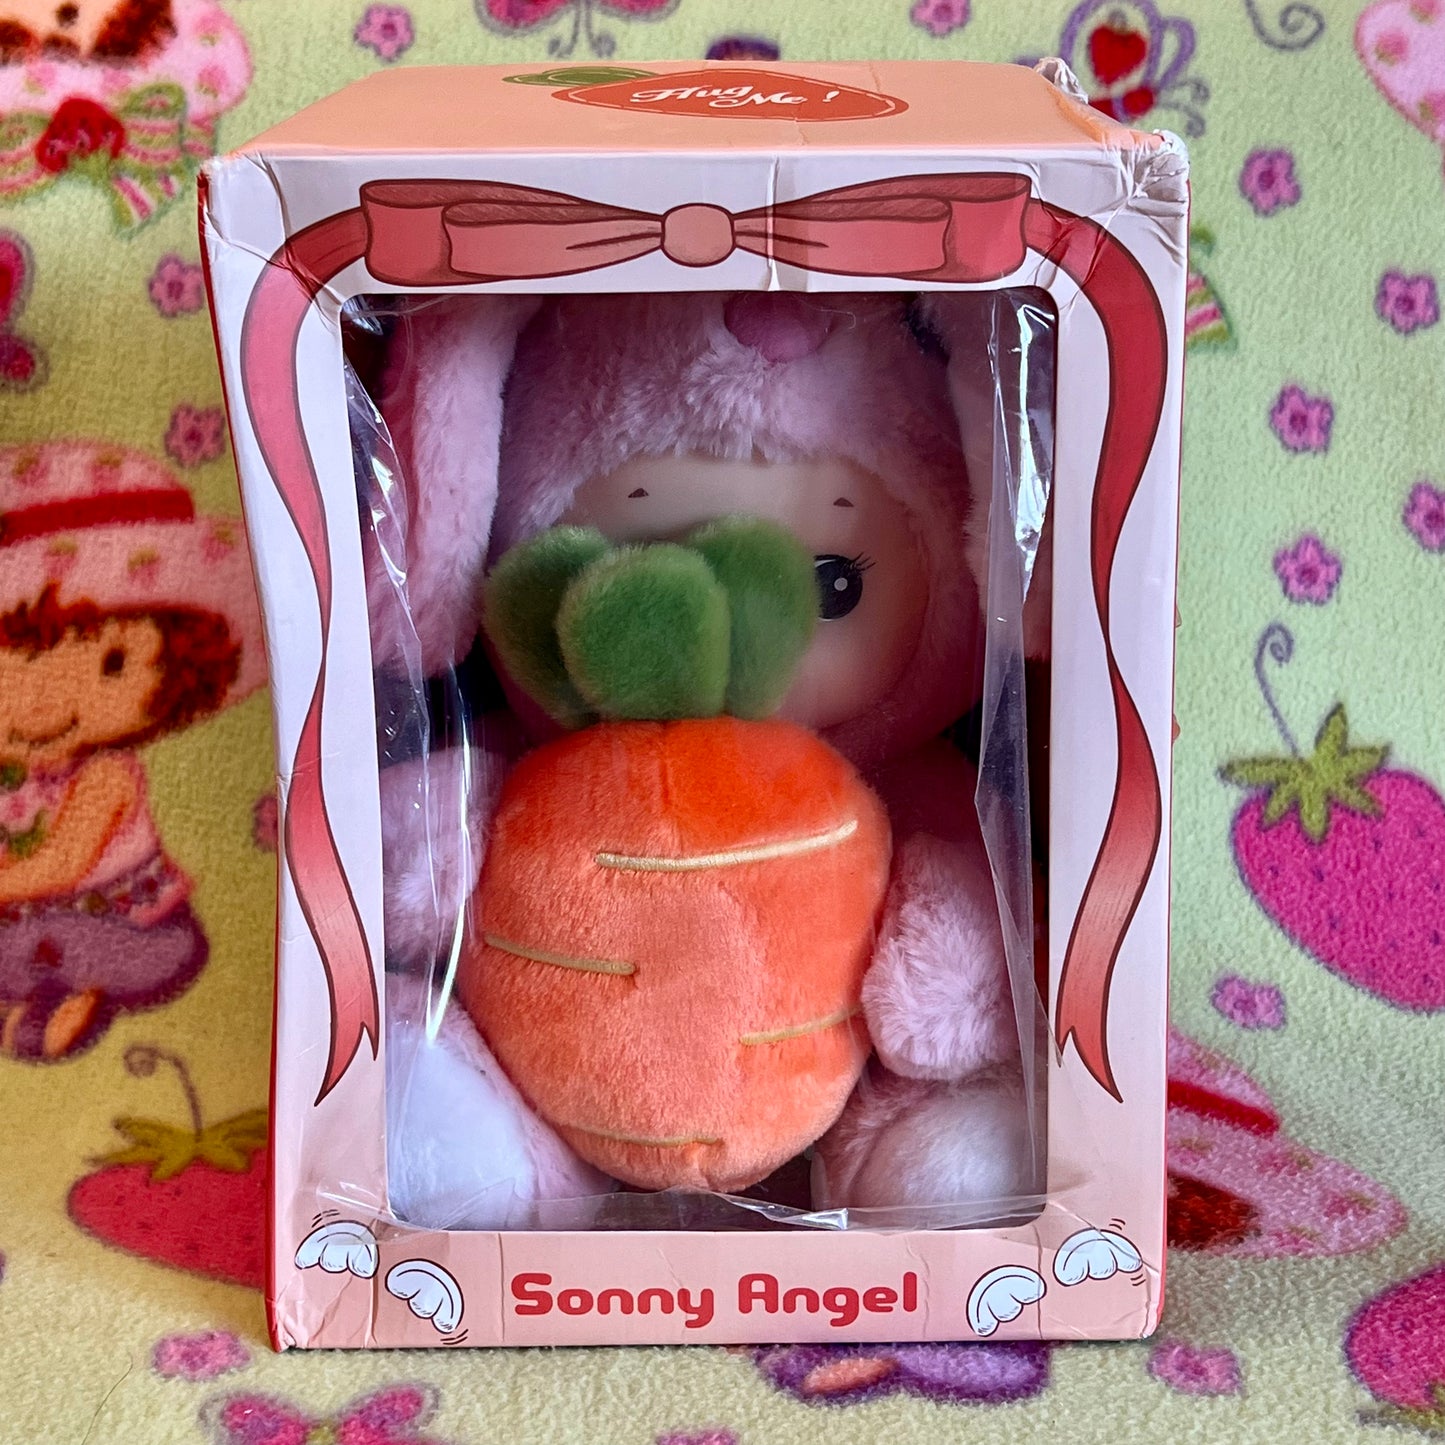 Sonny Angel Pink Cuddly Rabbit Plush